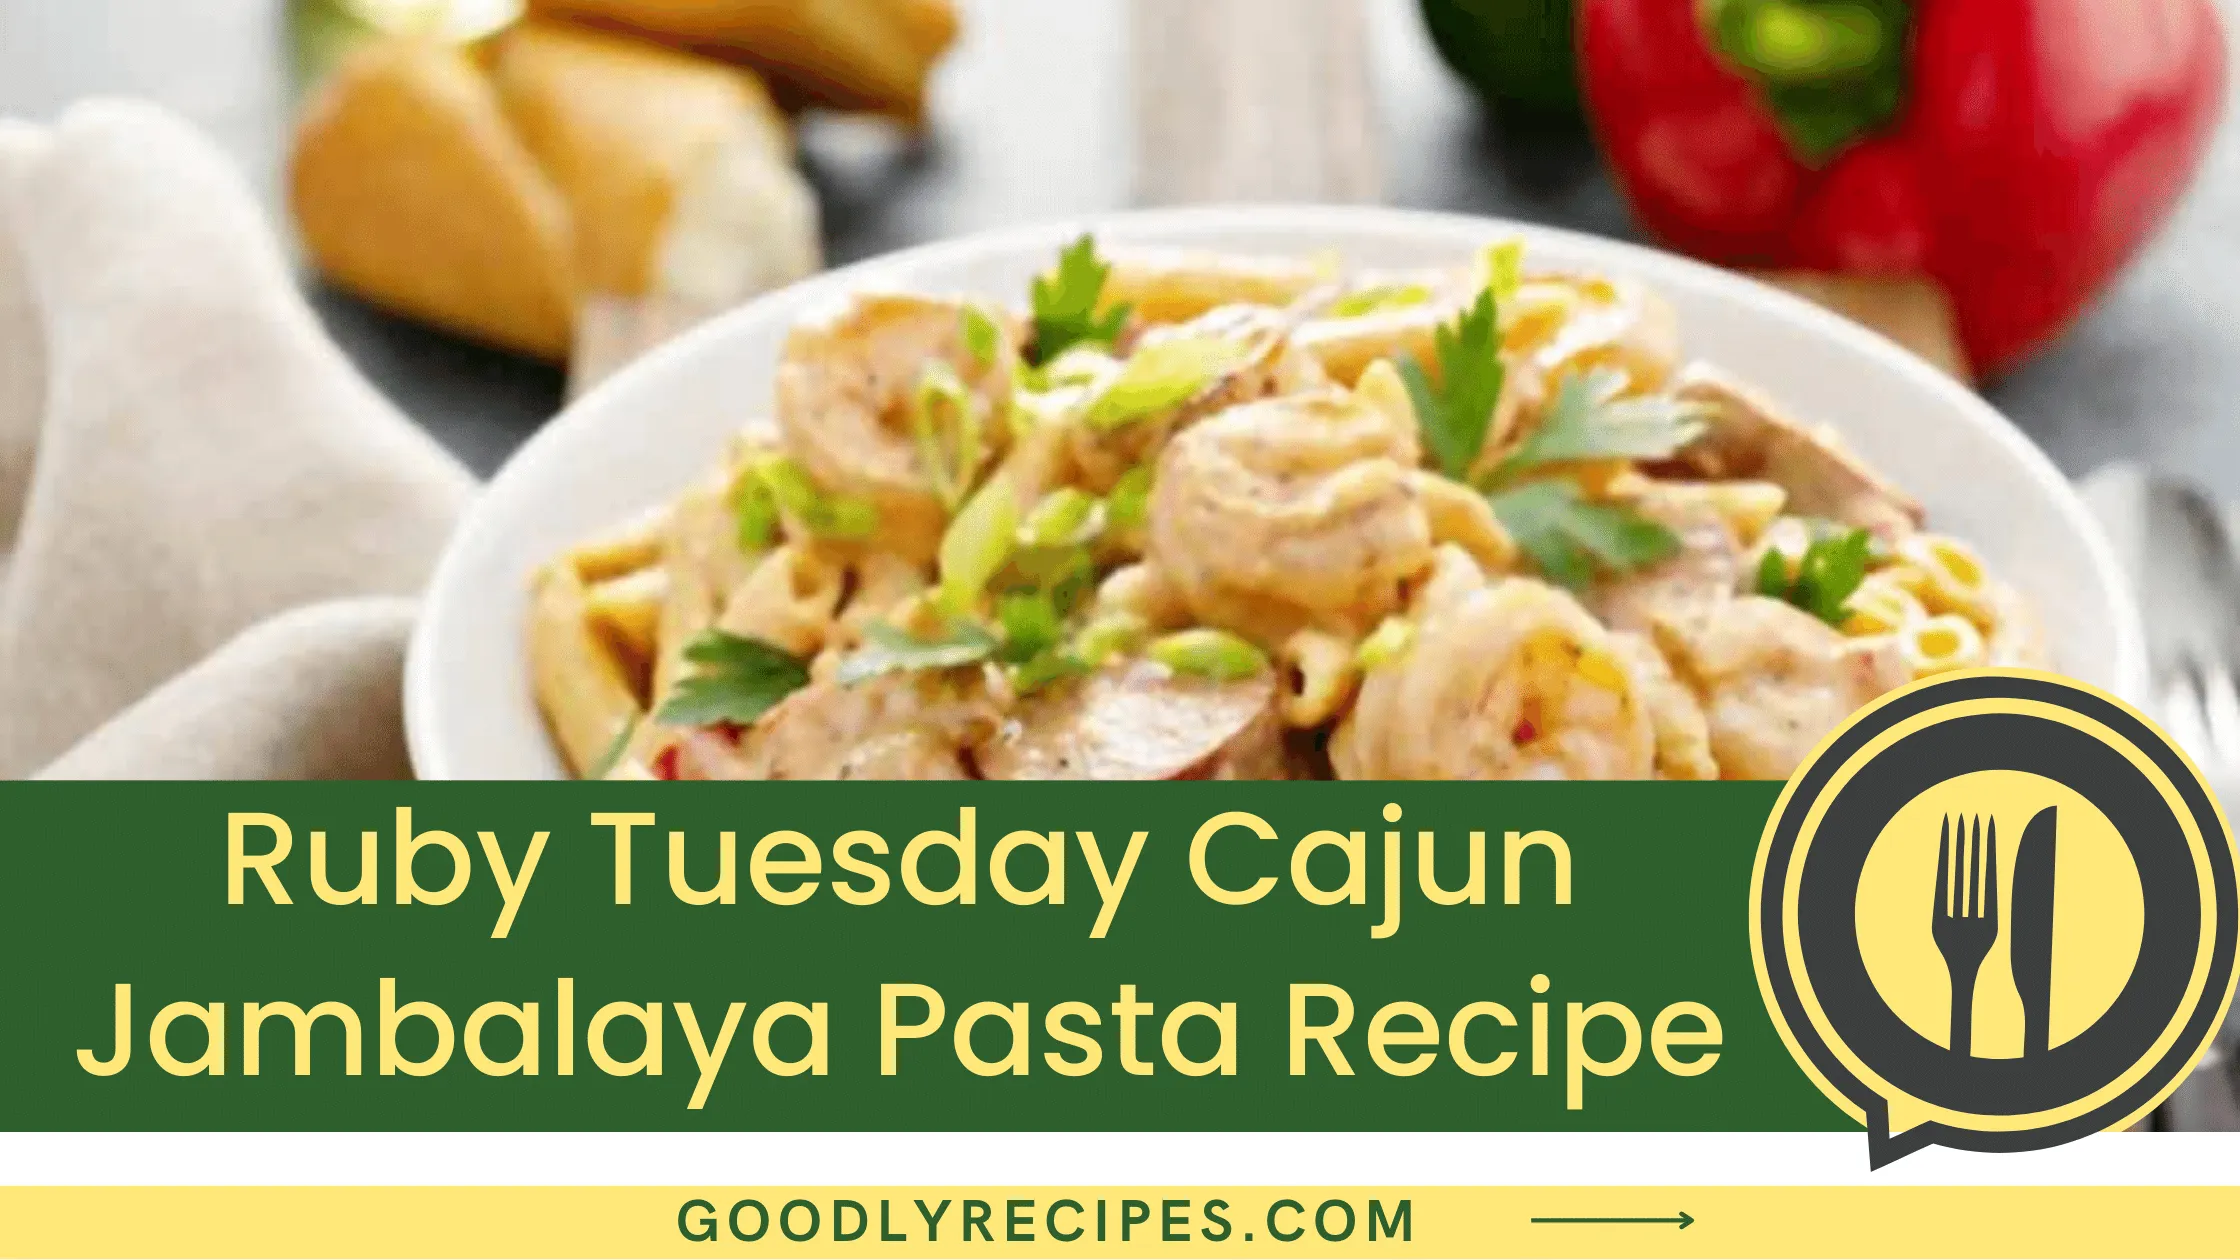 What is Ruby Tuesday Cajun Jambalaya Pasta?